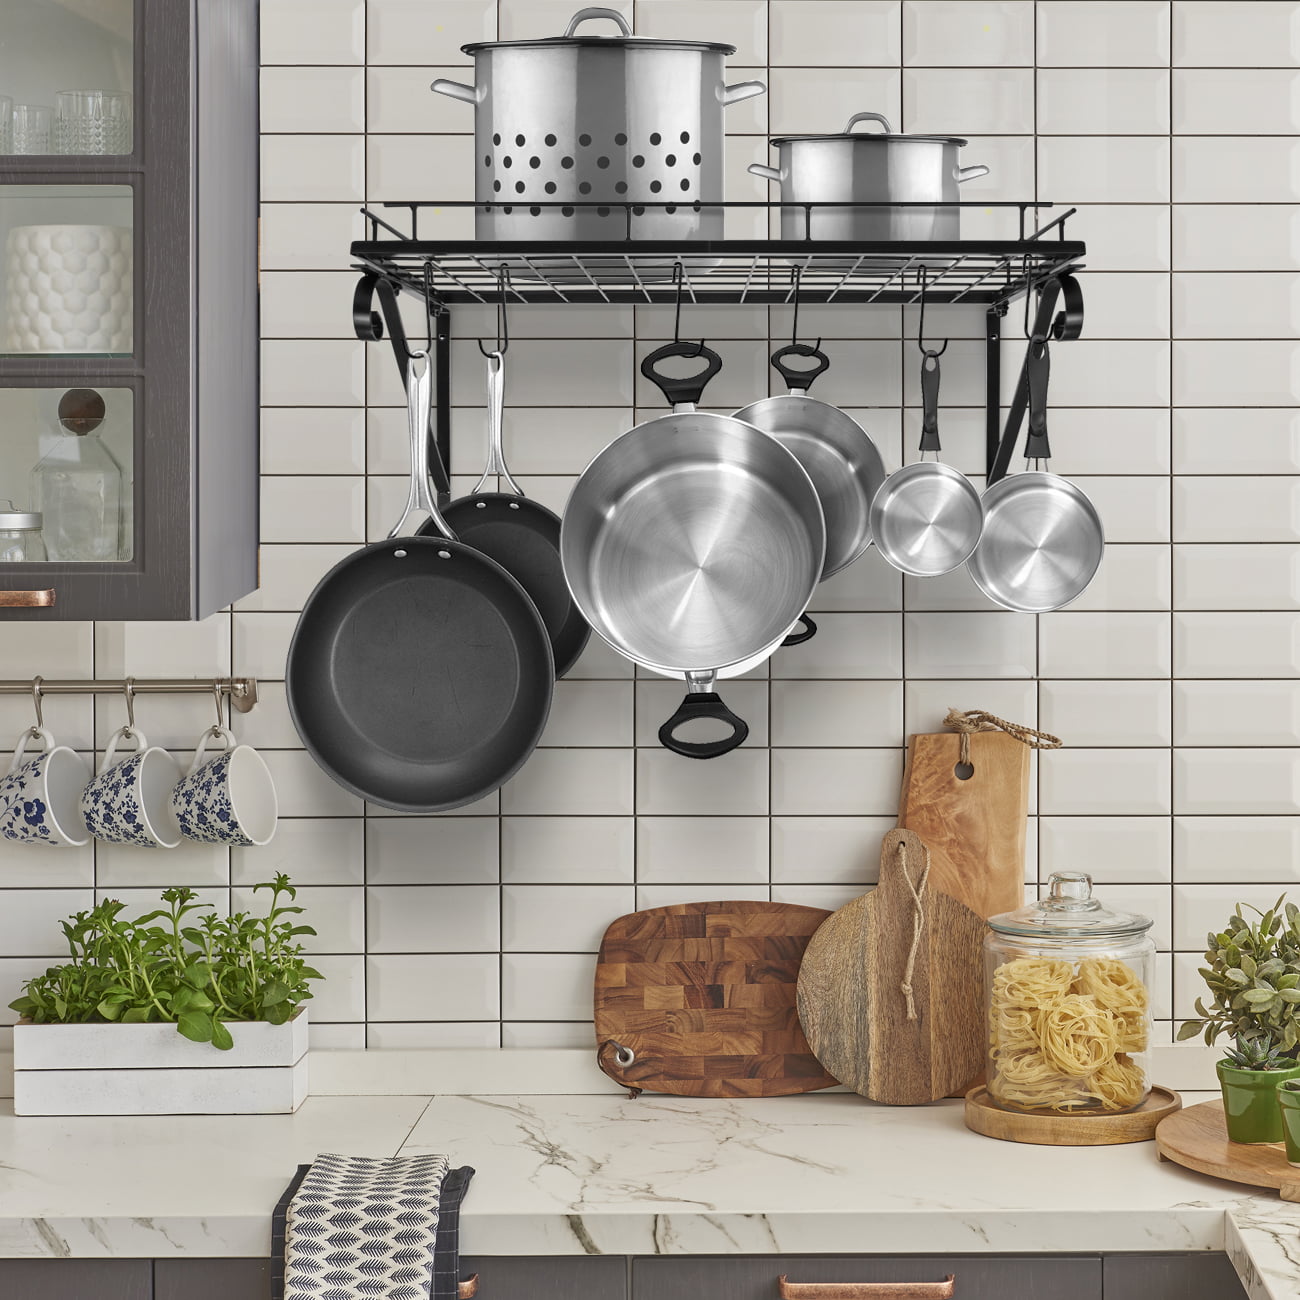 Viral Pots and Pans Set! #kitchenpans #kitchenpots #kitchenset